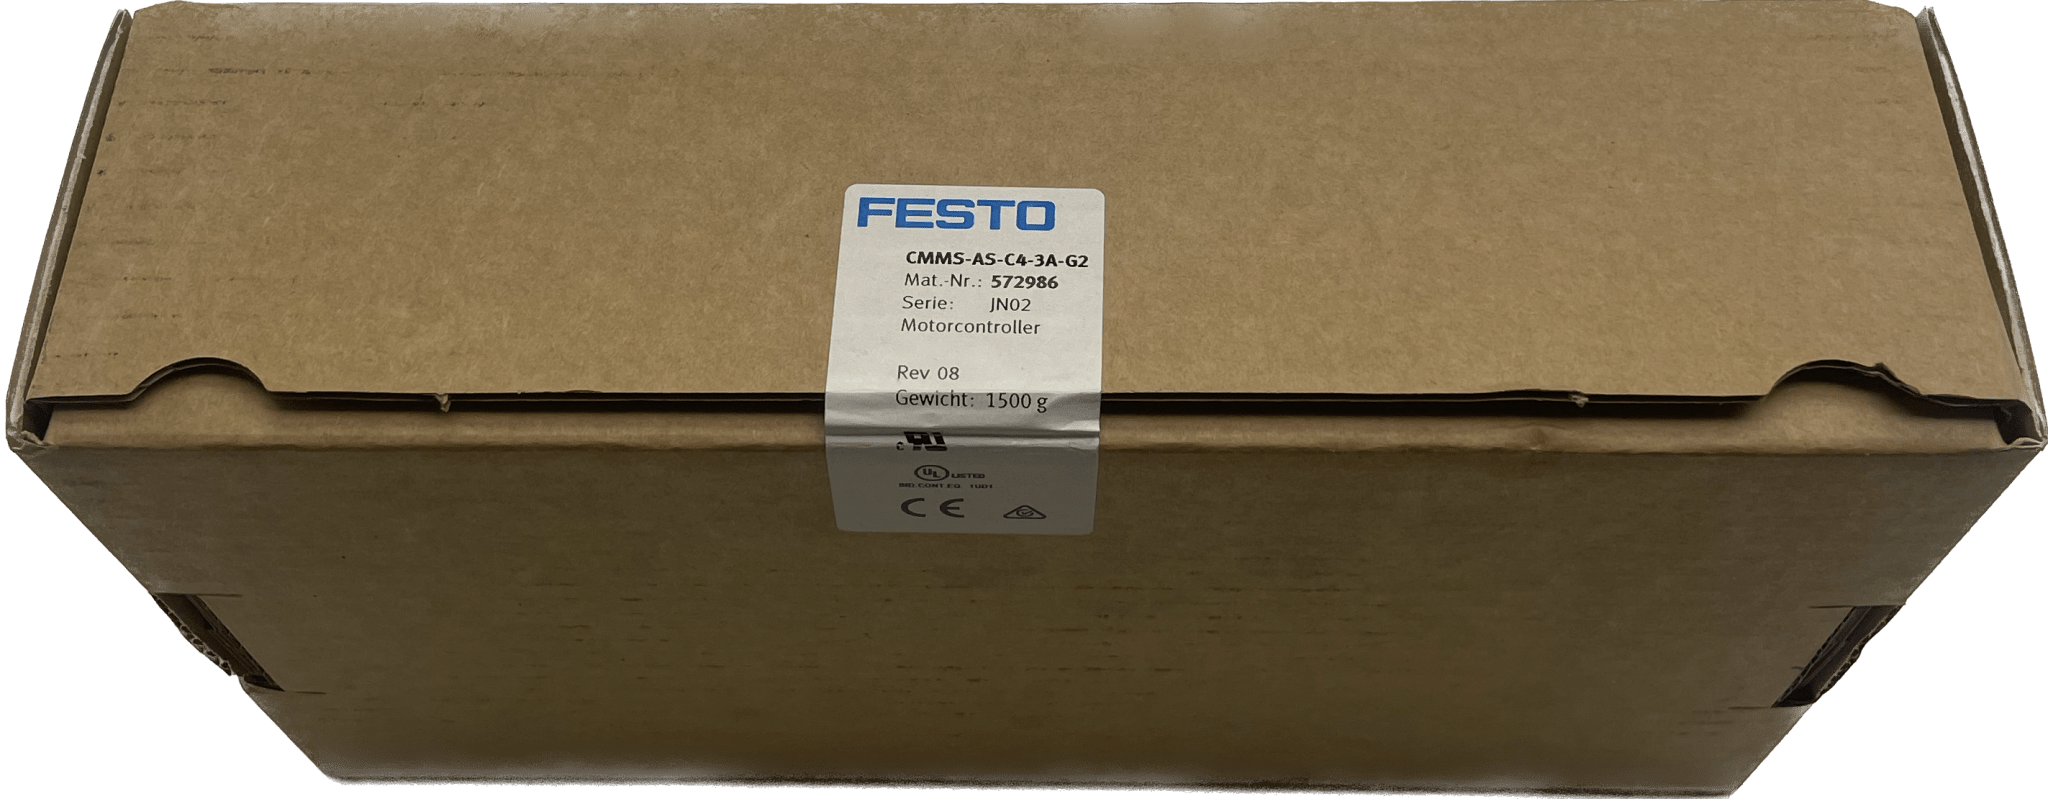 Festo Motorcontroller CMMS-AS-C4-3A-G2 - #product_category# | Klenk Maschinenhandel